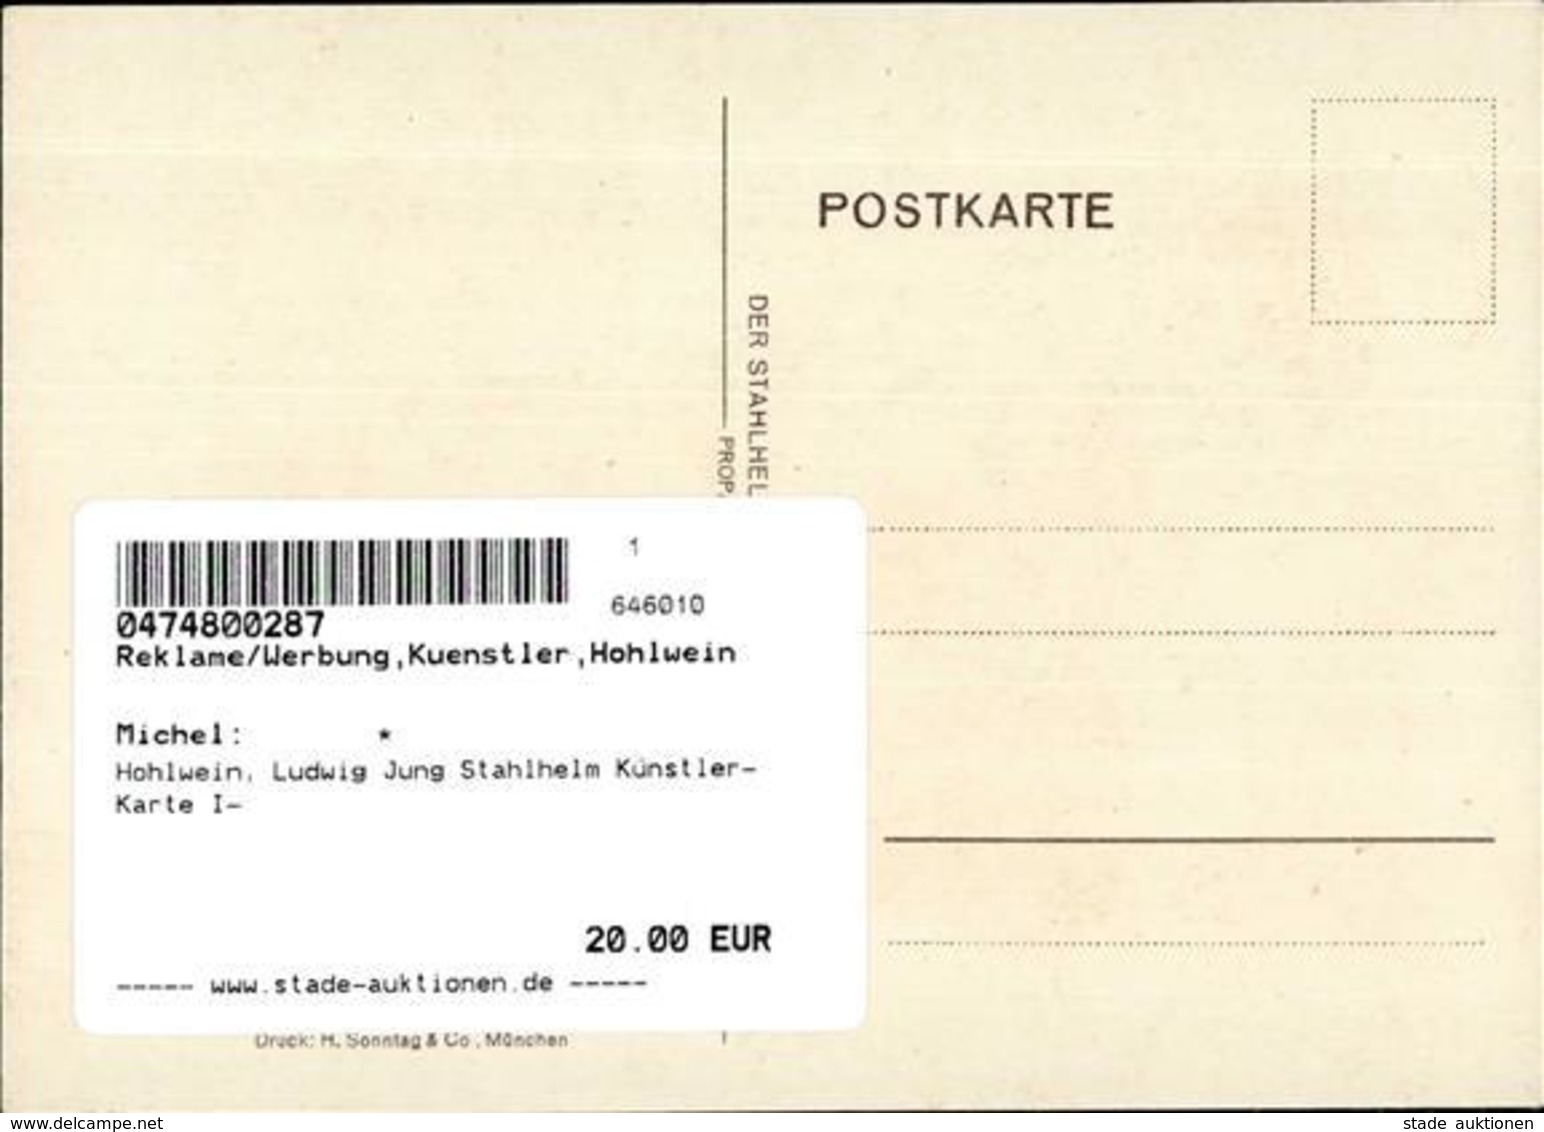 Hohlwein, Ludwig Jung Stahlhelm Künstler-Karte I- - Hohlwein, Ludwig